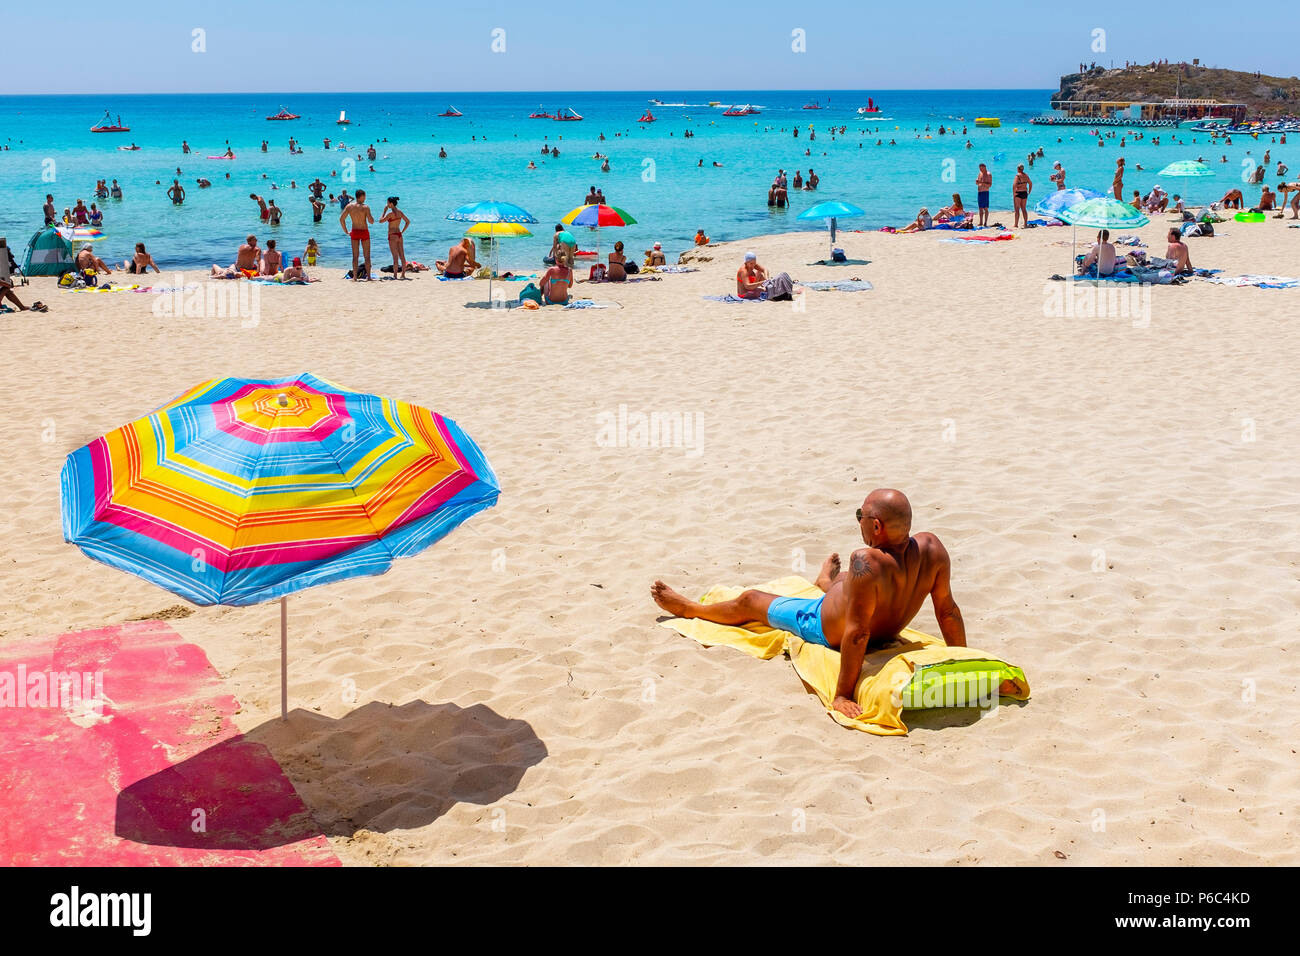 Tourists on the beach at Nissi Bay, Nissi Beach, near Ayia Napa, Cyprus  Stock Photo - Alamy